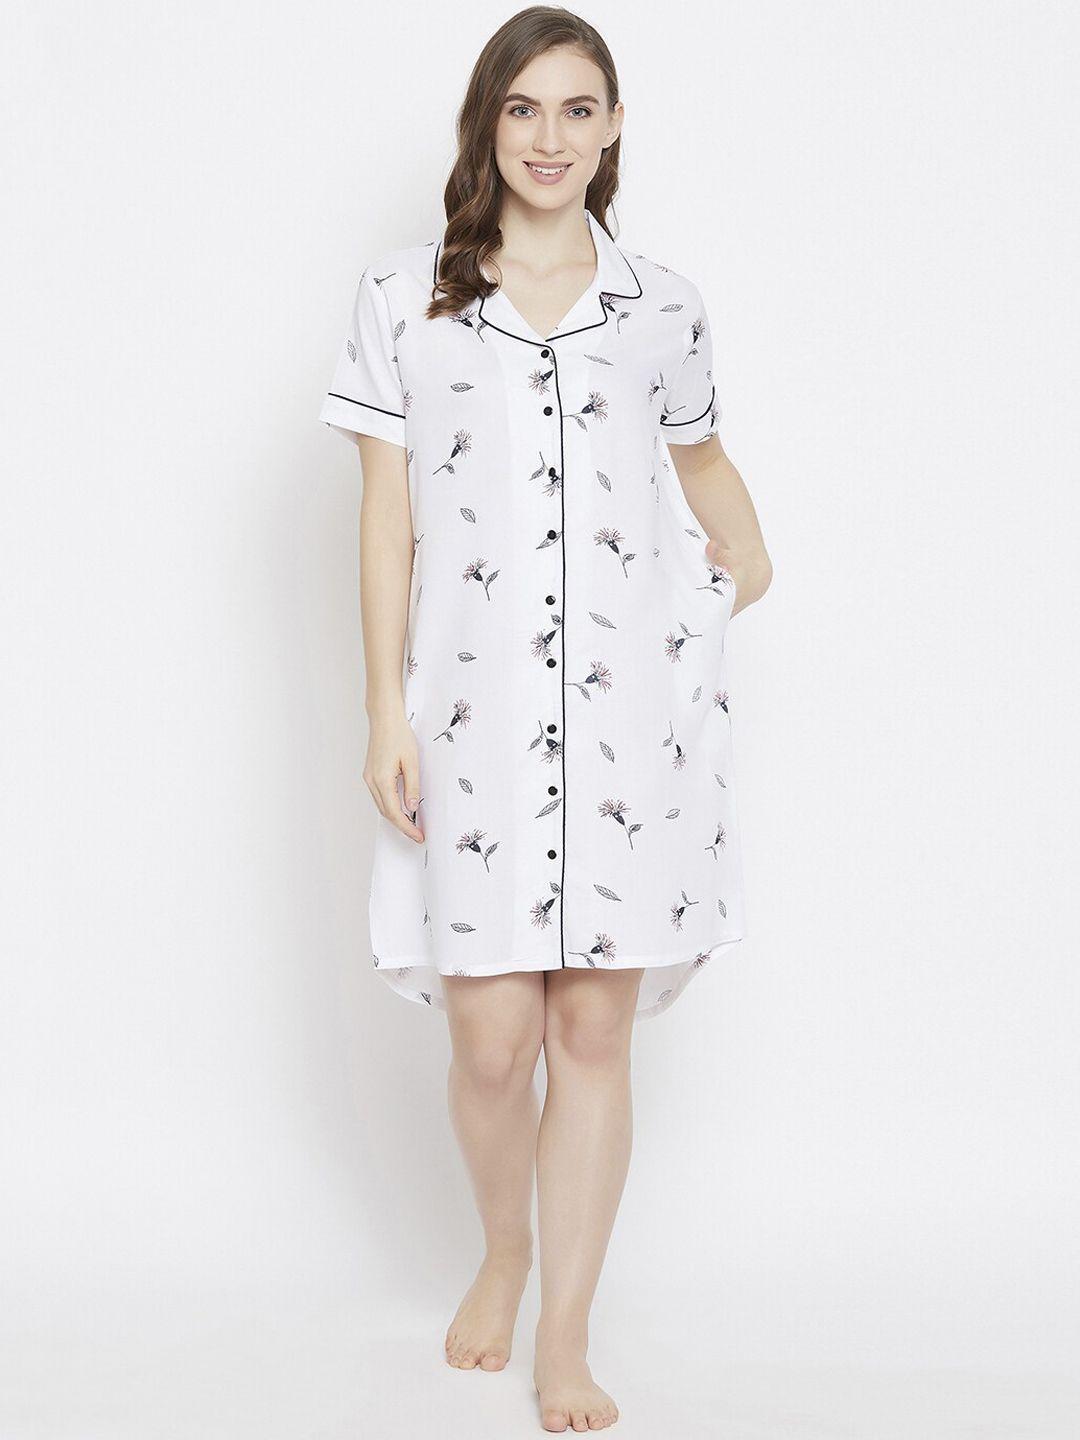 clovia white & black floral print sleep shirt